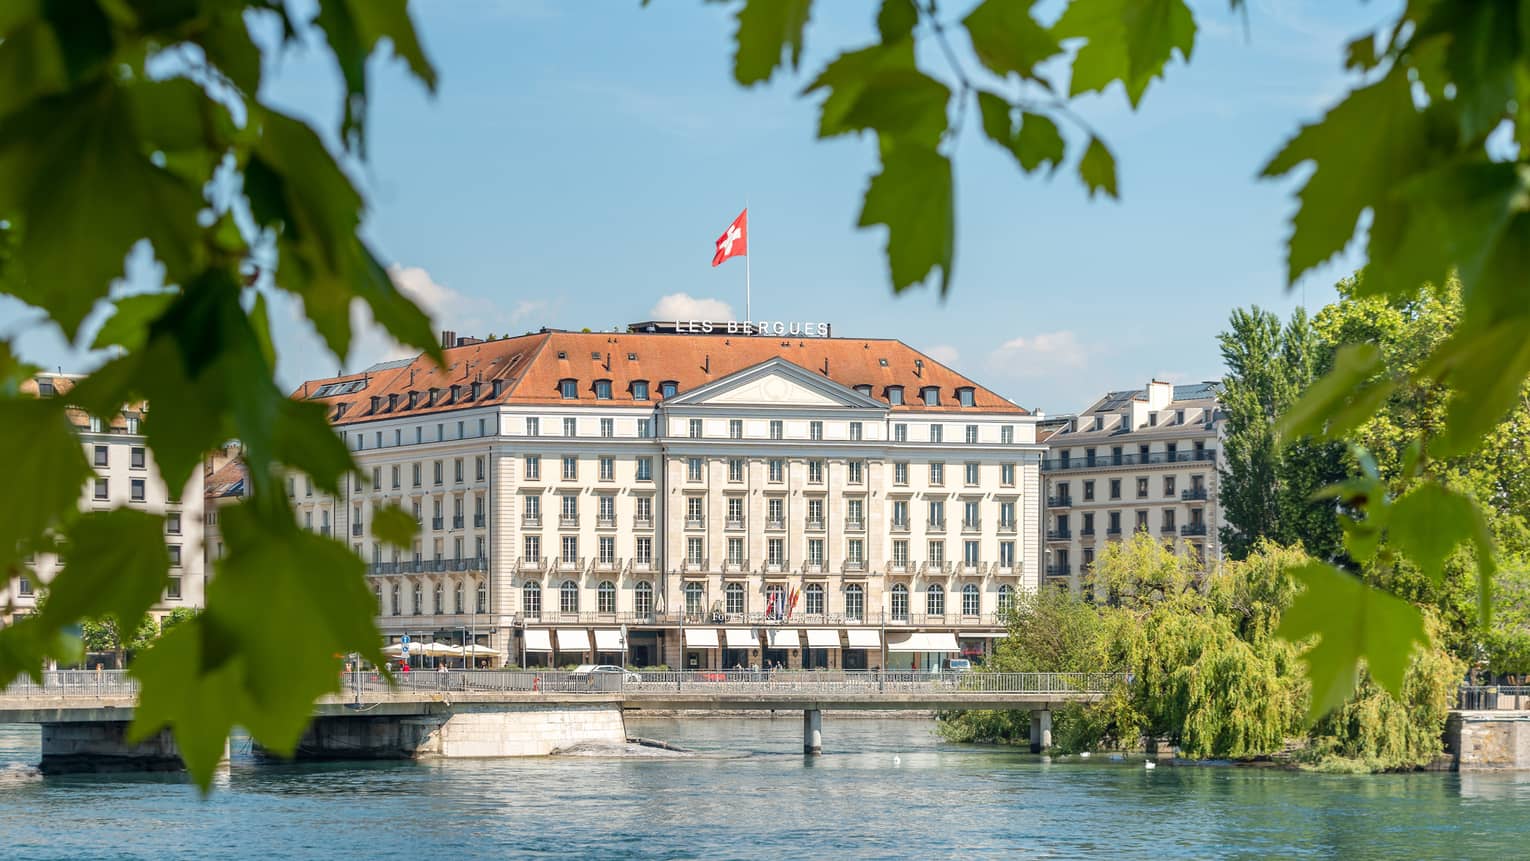 Four Seasons Hotel Geneva surrounded by green foliage, Lake Geneva in the foreground